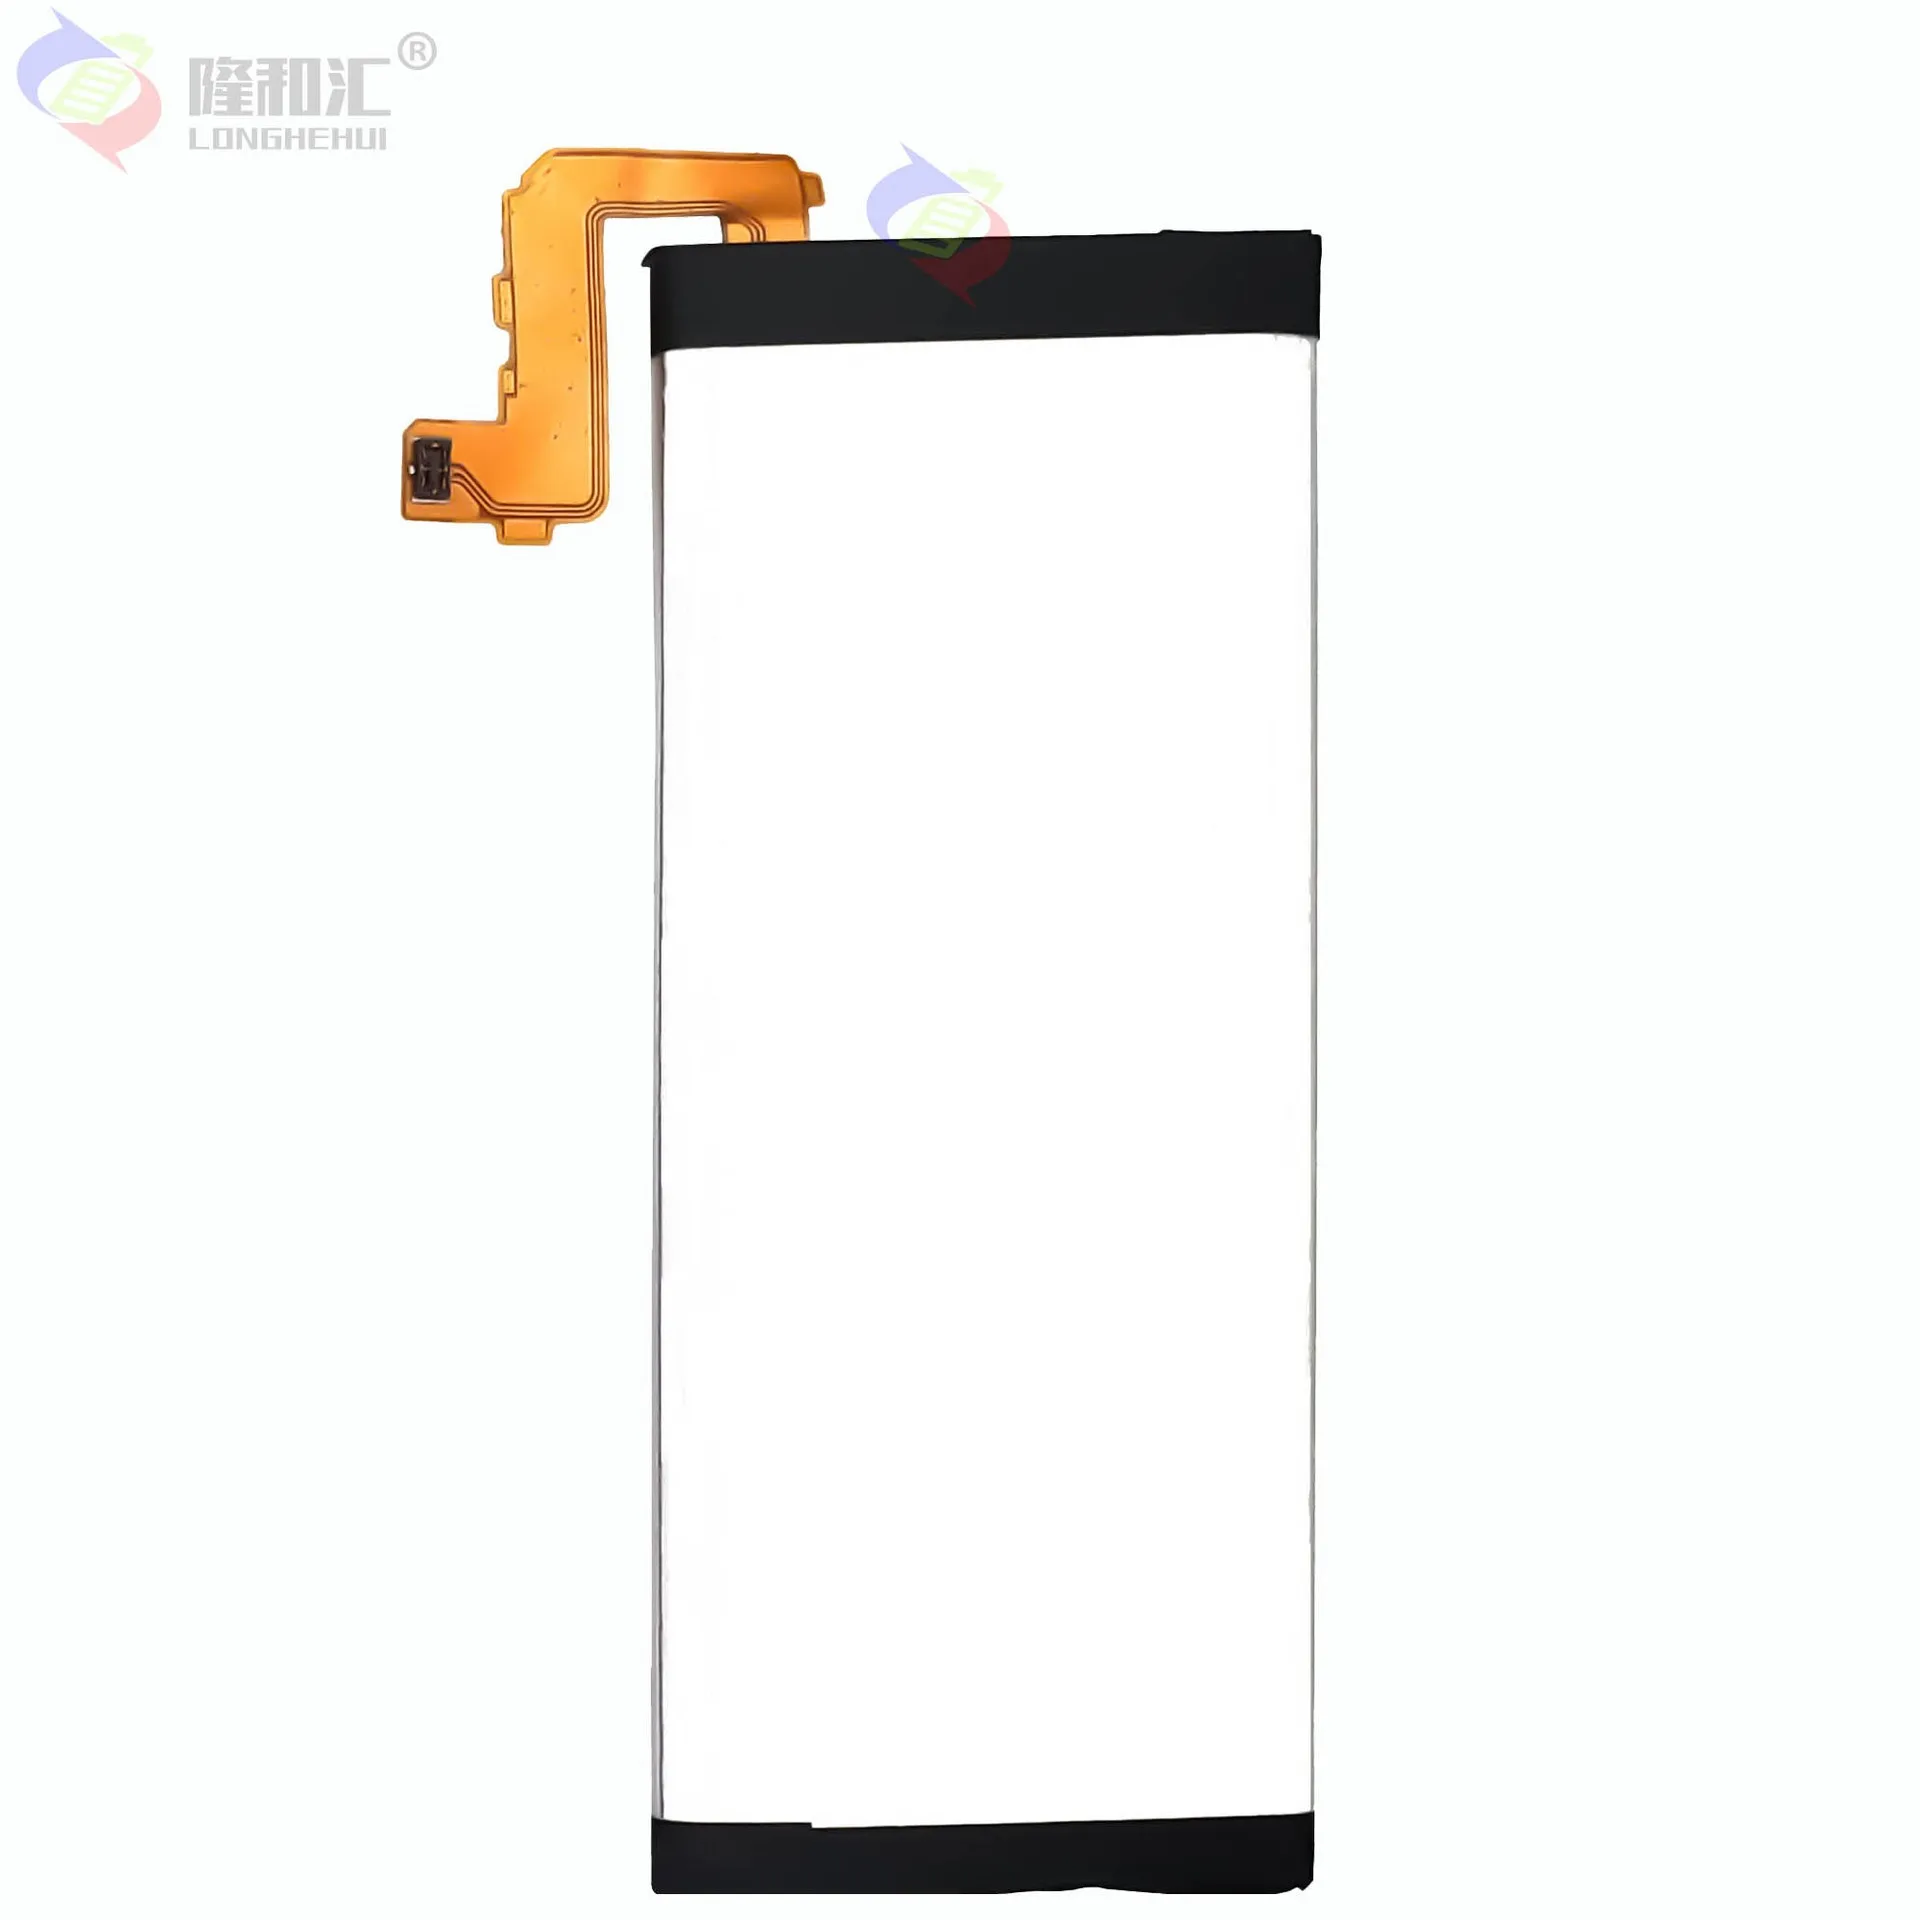 Original SONY Phone Battery For SONY Xperia XZ Premium G8142 XZP G8142 G8141 Replacement Batteries LIP1642ERPC bateria enlarge